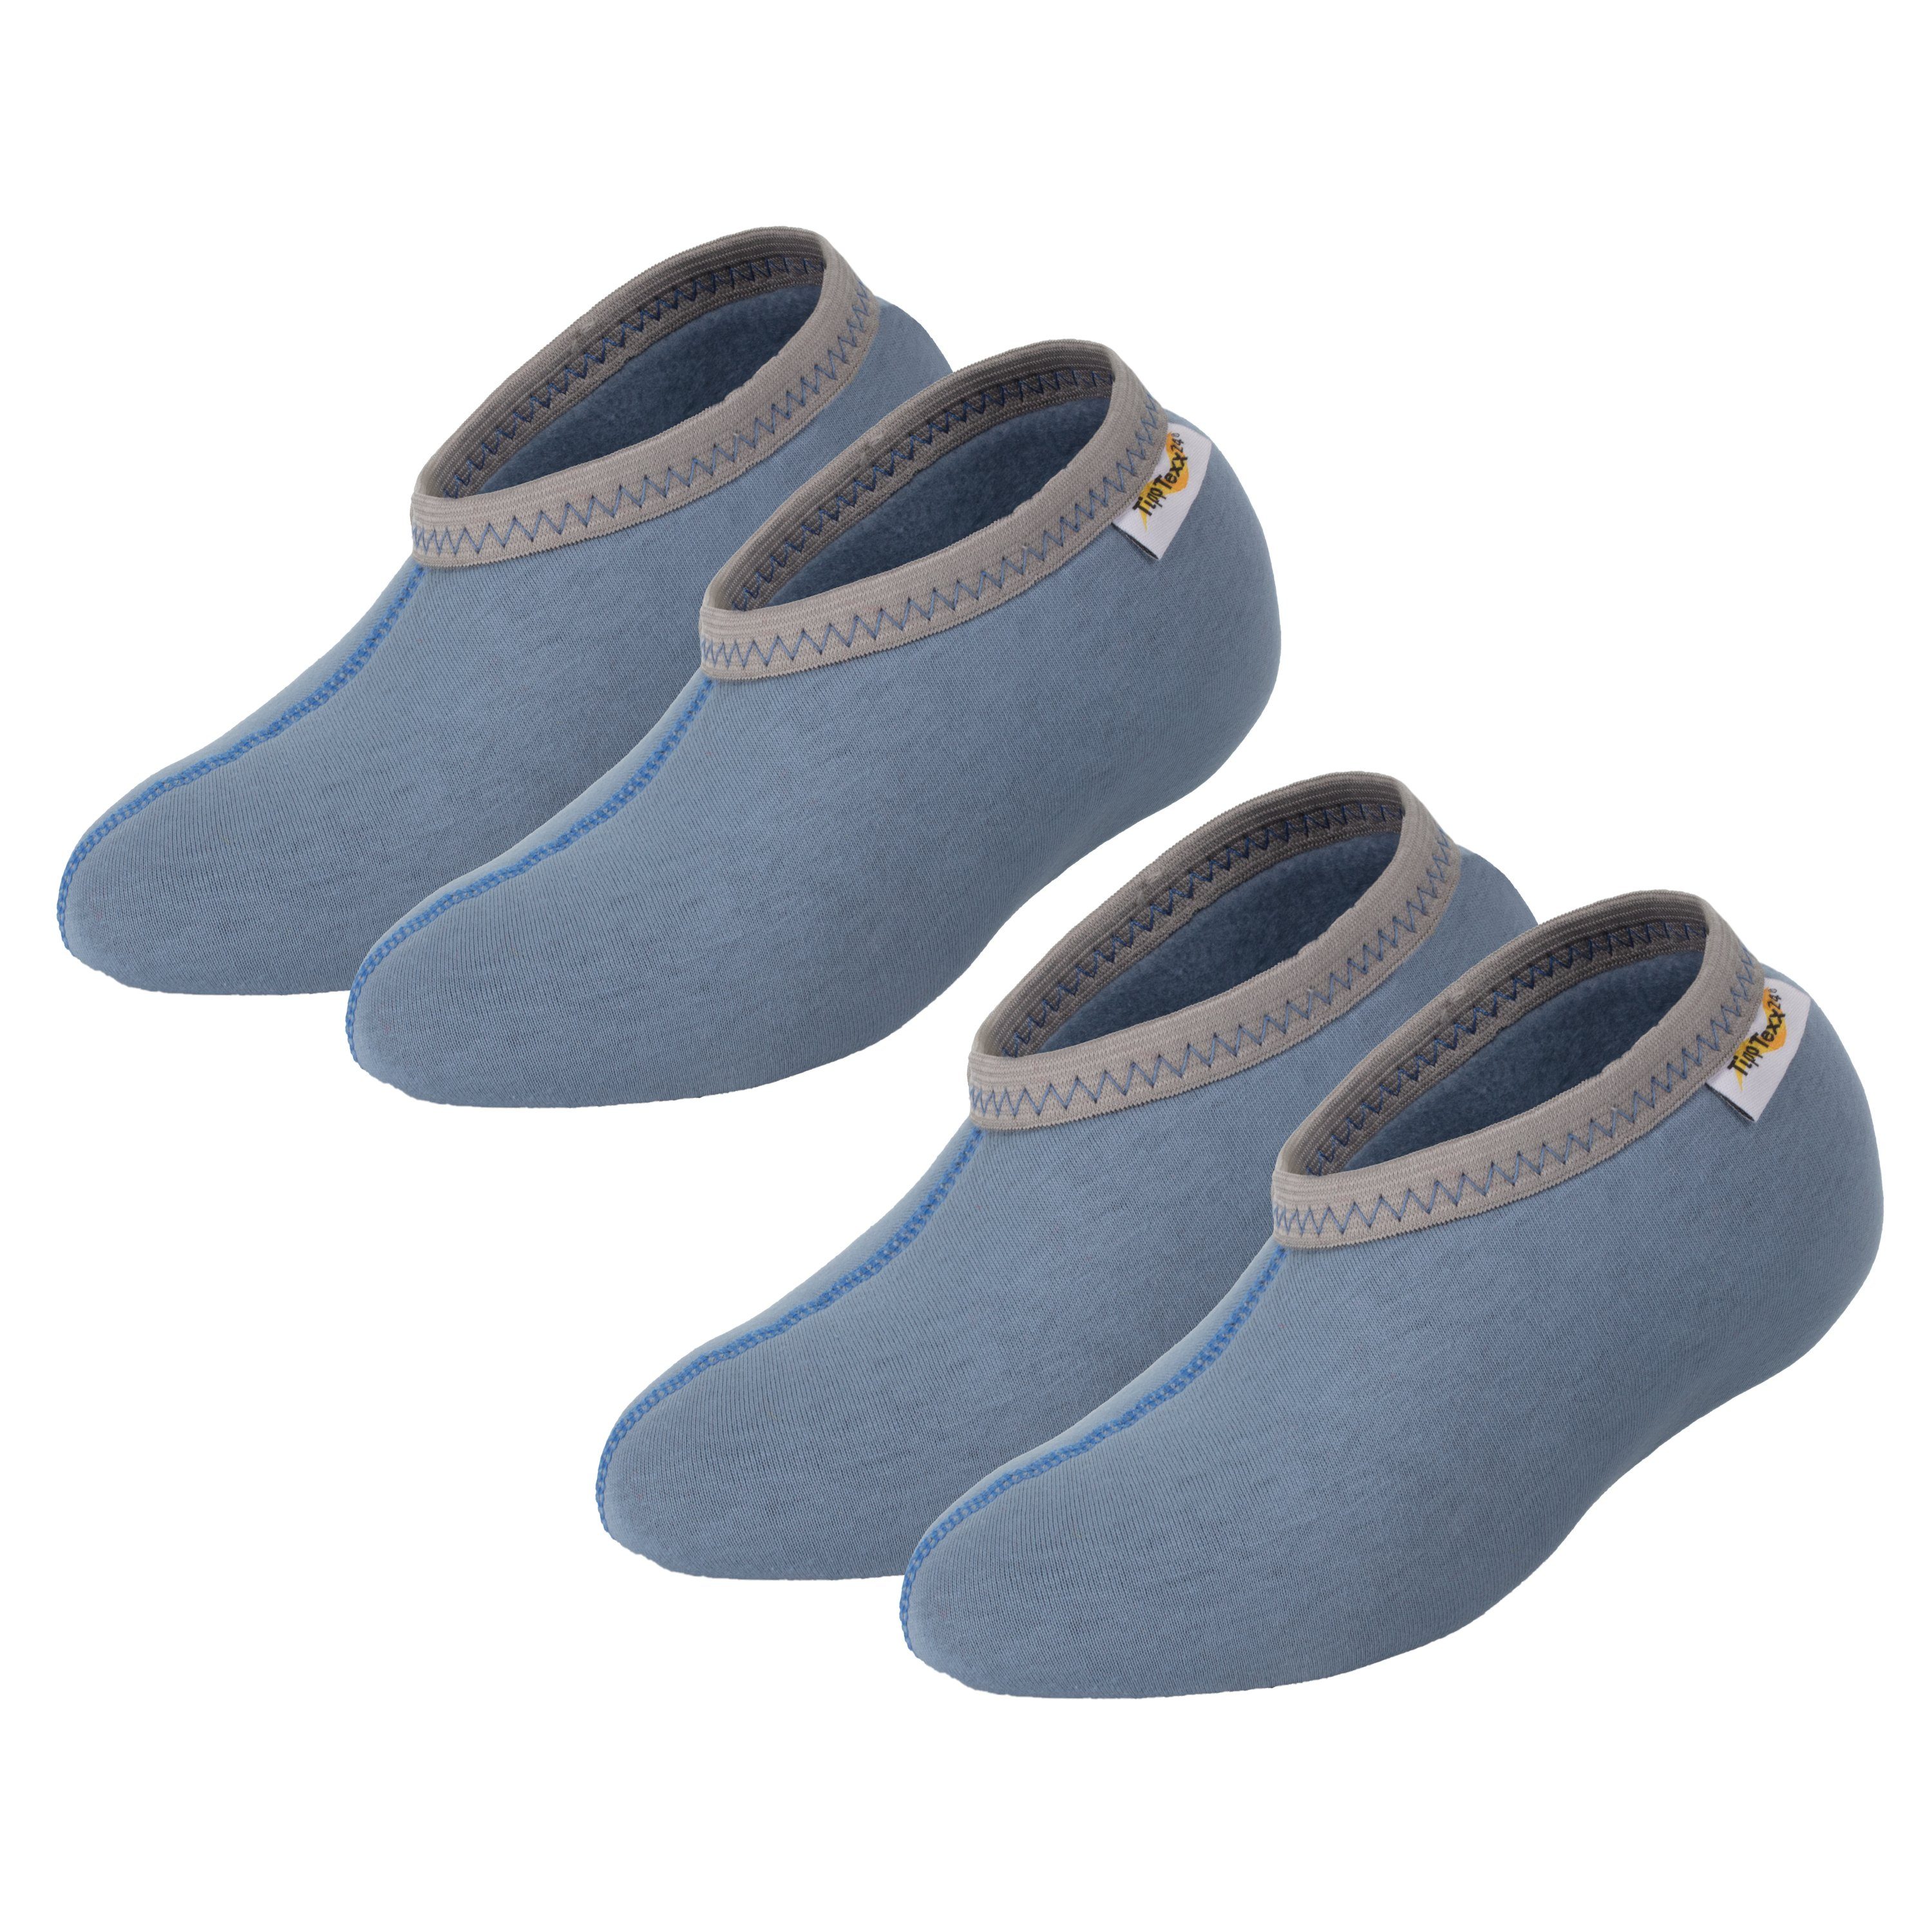 TippTexx 24 Socken 2 100% Baumwolle Paar Nässeschutz Gummistiefelsocken Stiefelsocken Blau